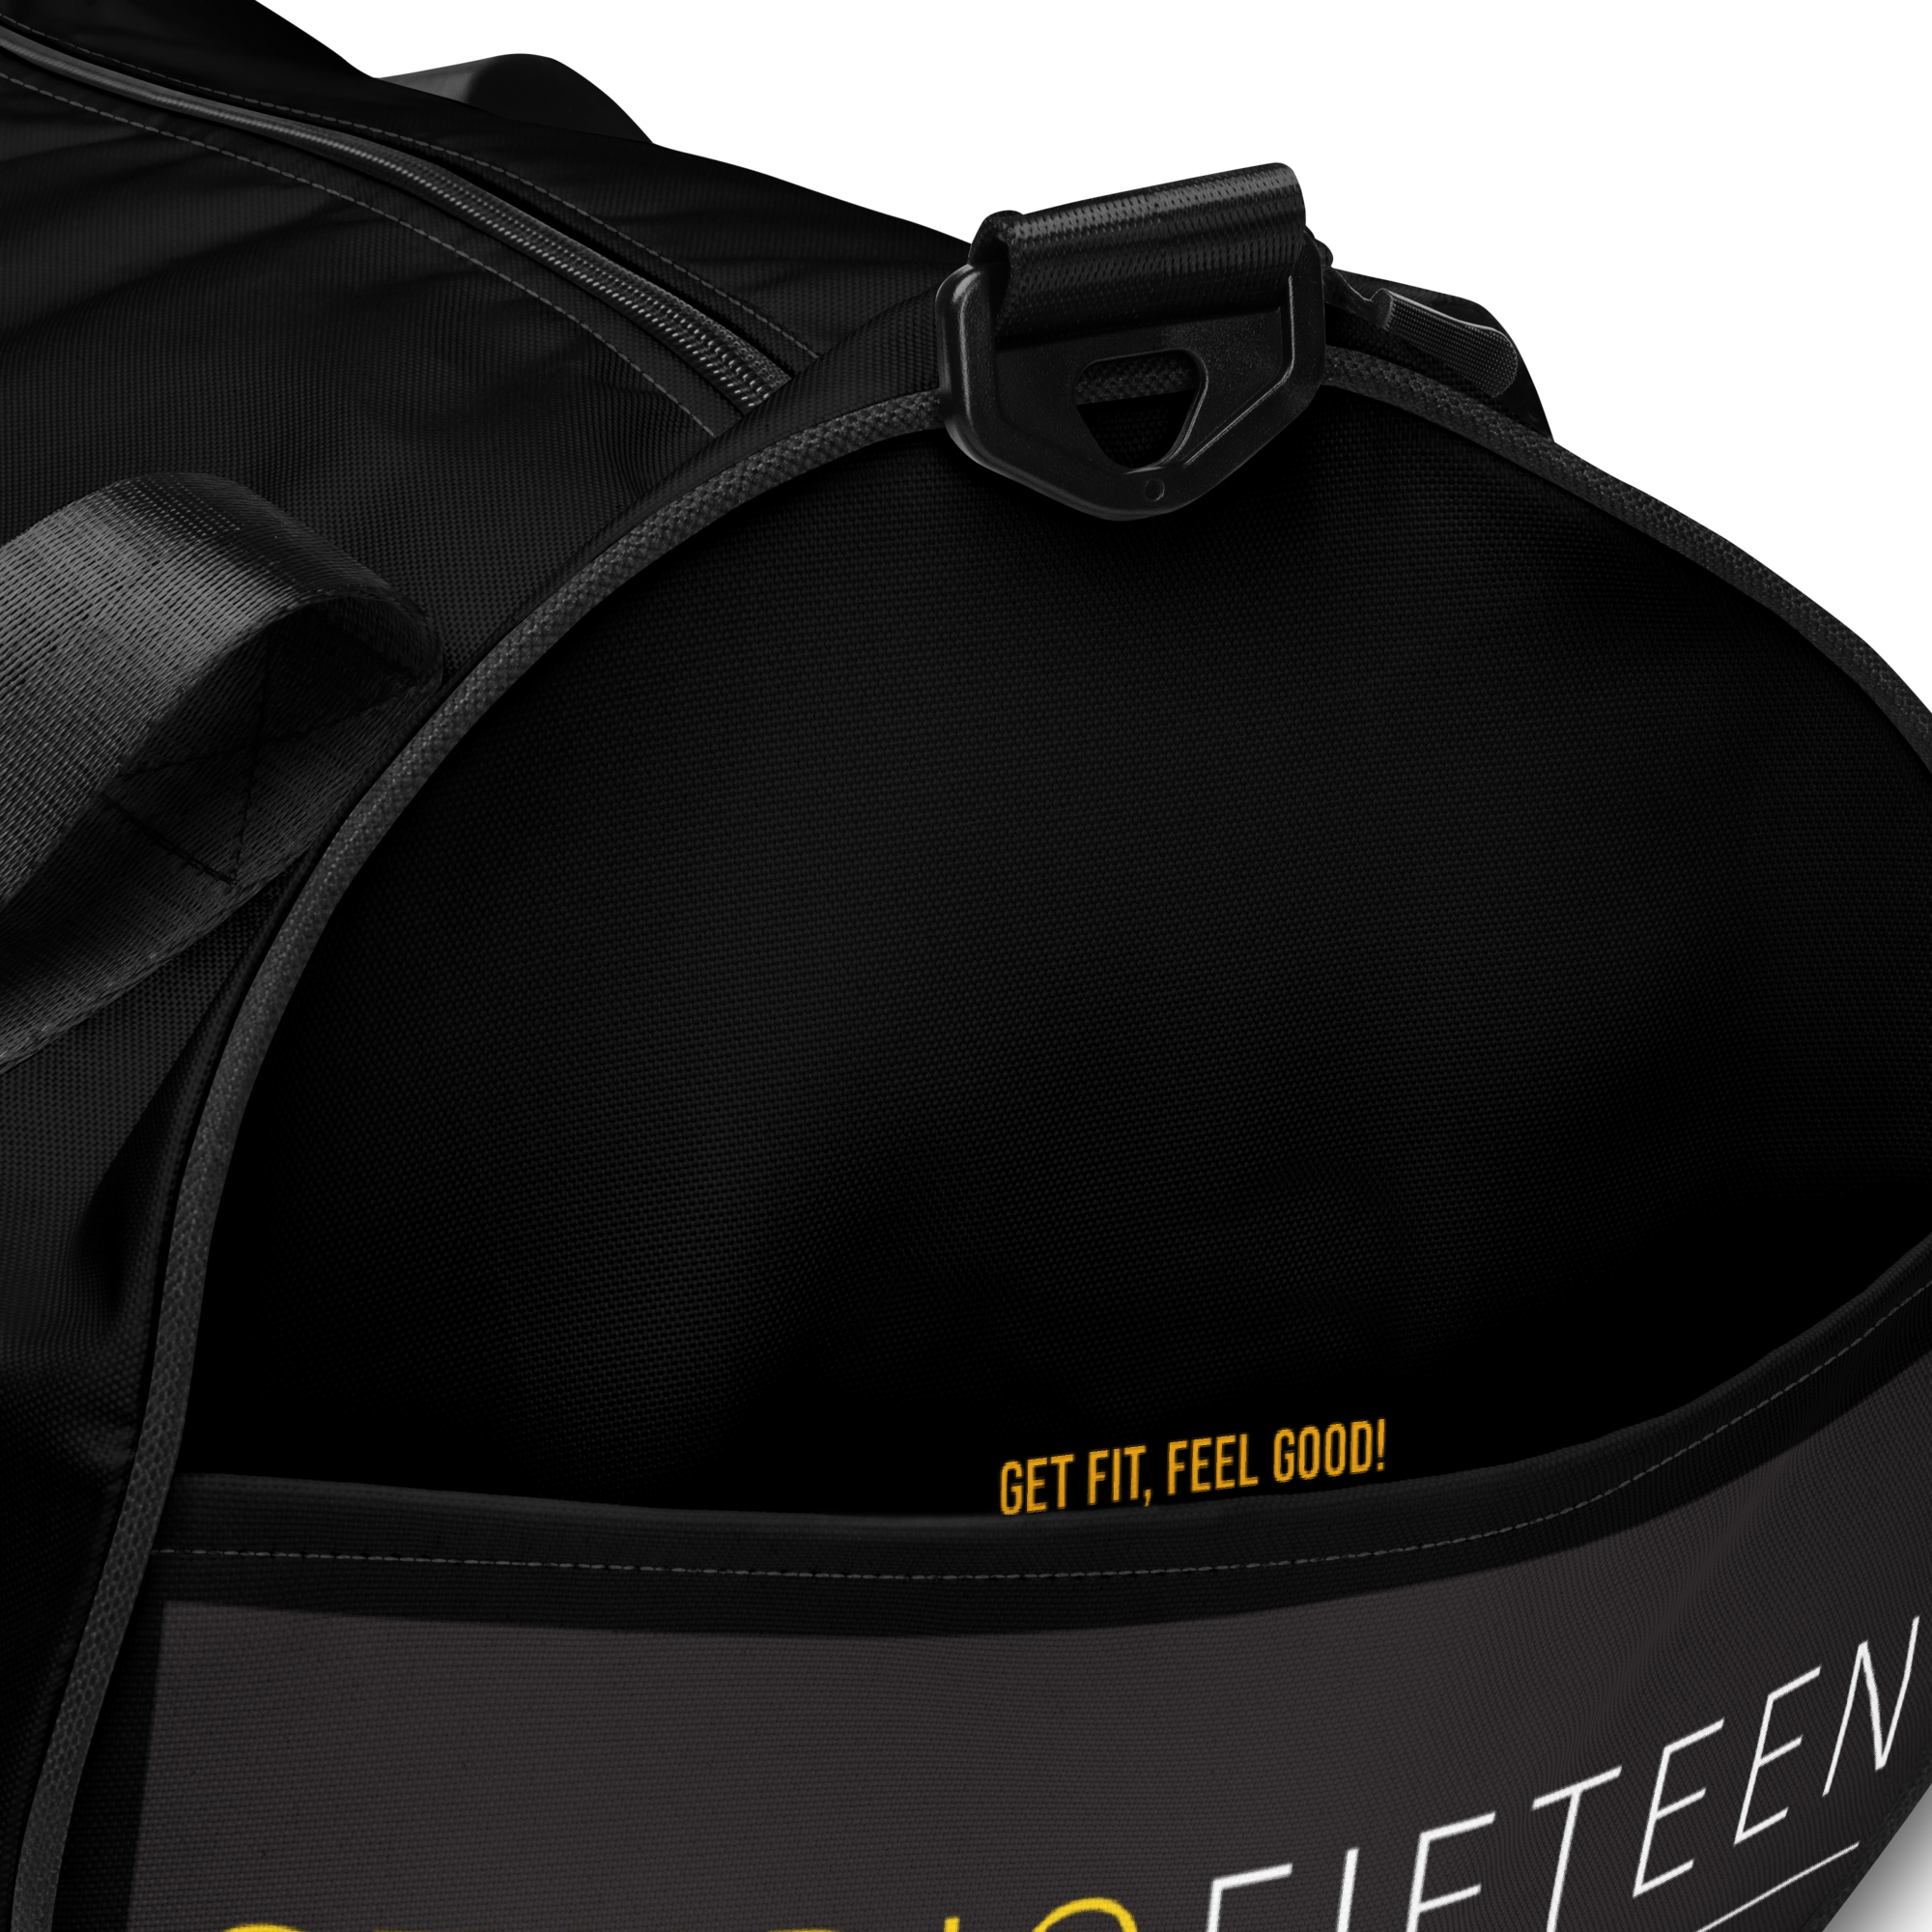 Studiofifteen Branded Gym Bag